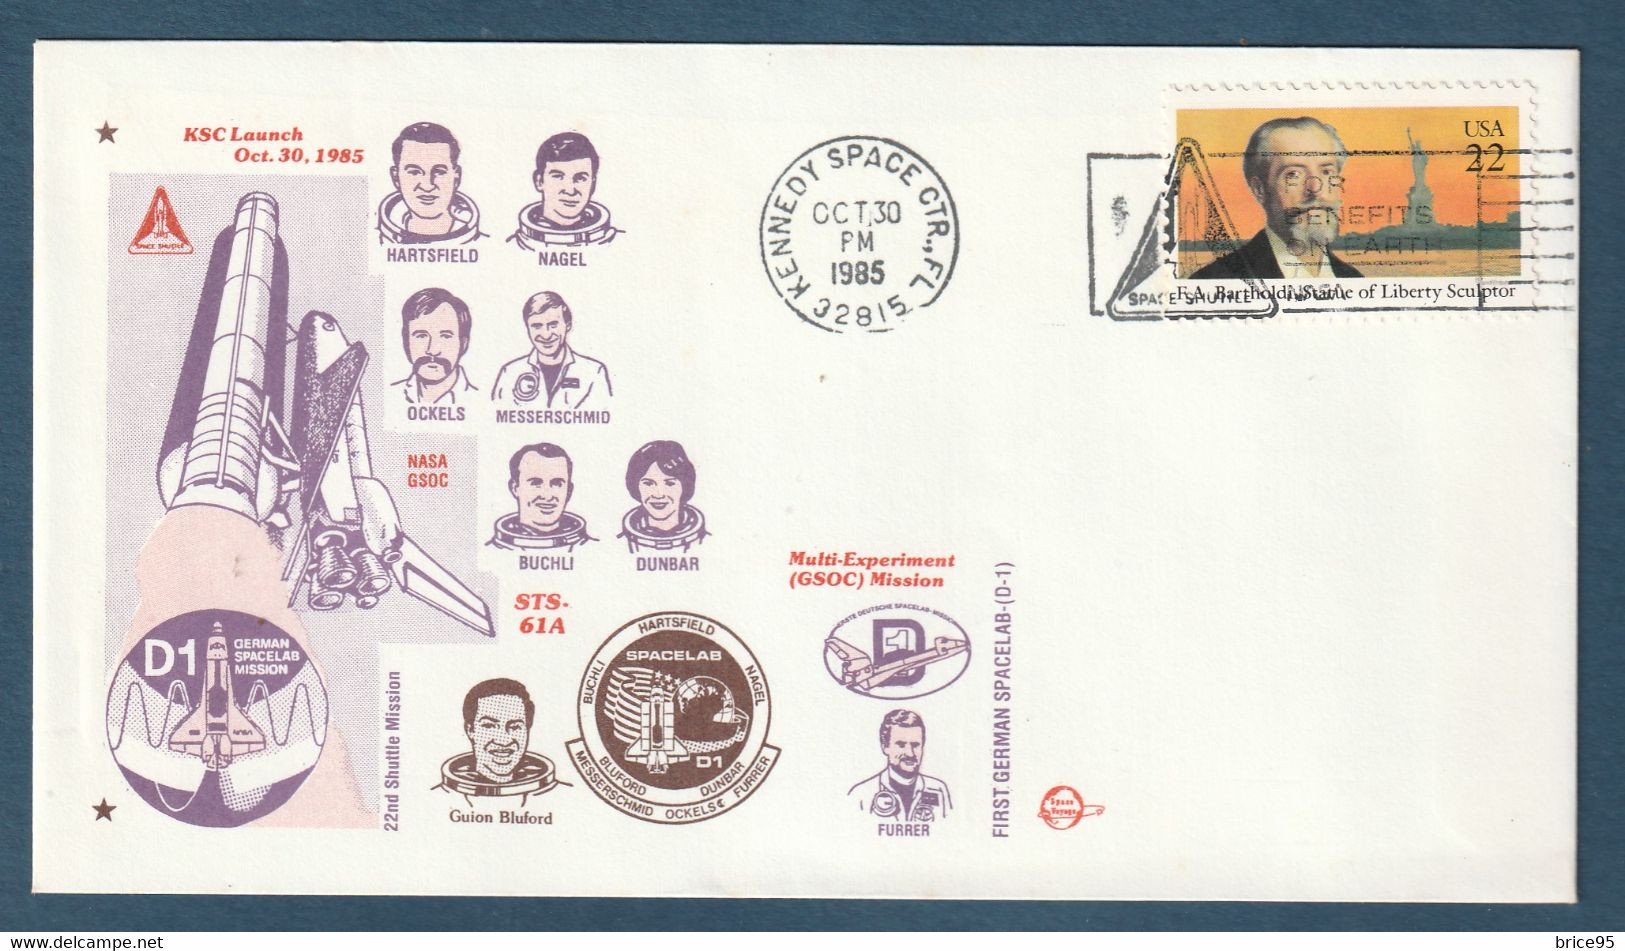 ✈️ Etats Unis - First German - Spacelab - D 1 - Multi Experiment Mission - GSOC - Houston - 1985 ✈️ - America Del Nord